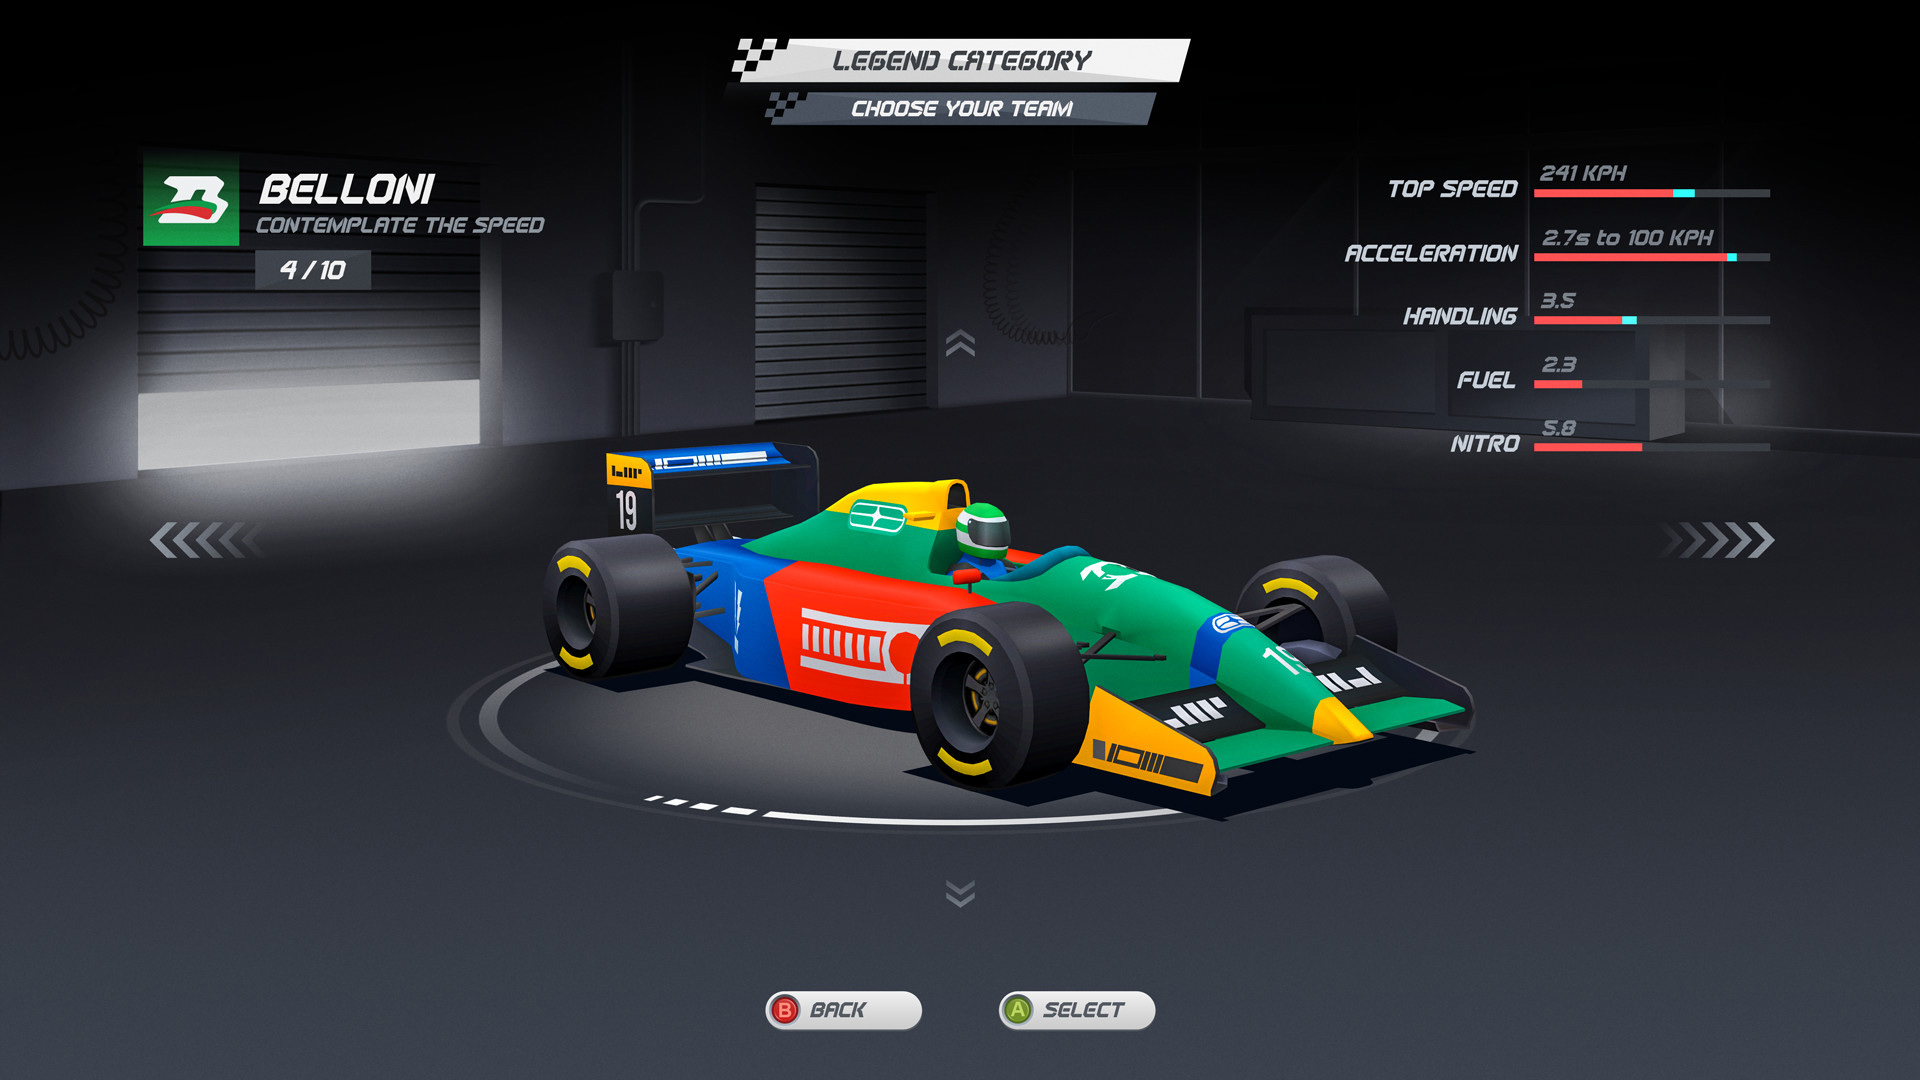 Jogo Horizon Chase Turbo: Senna Sempre para PS4